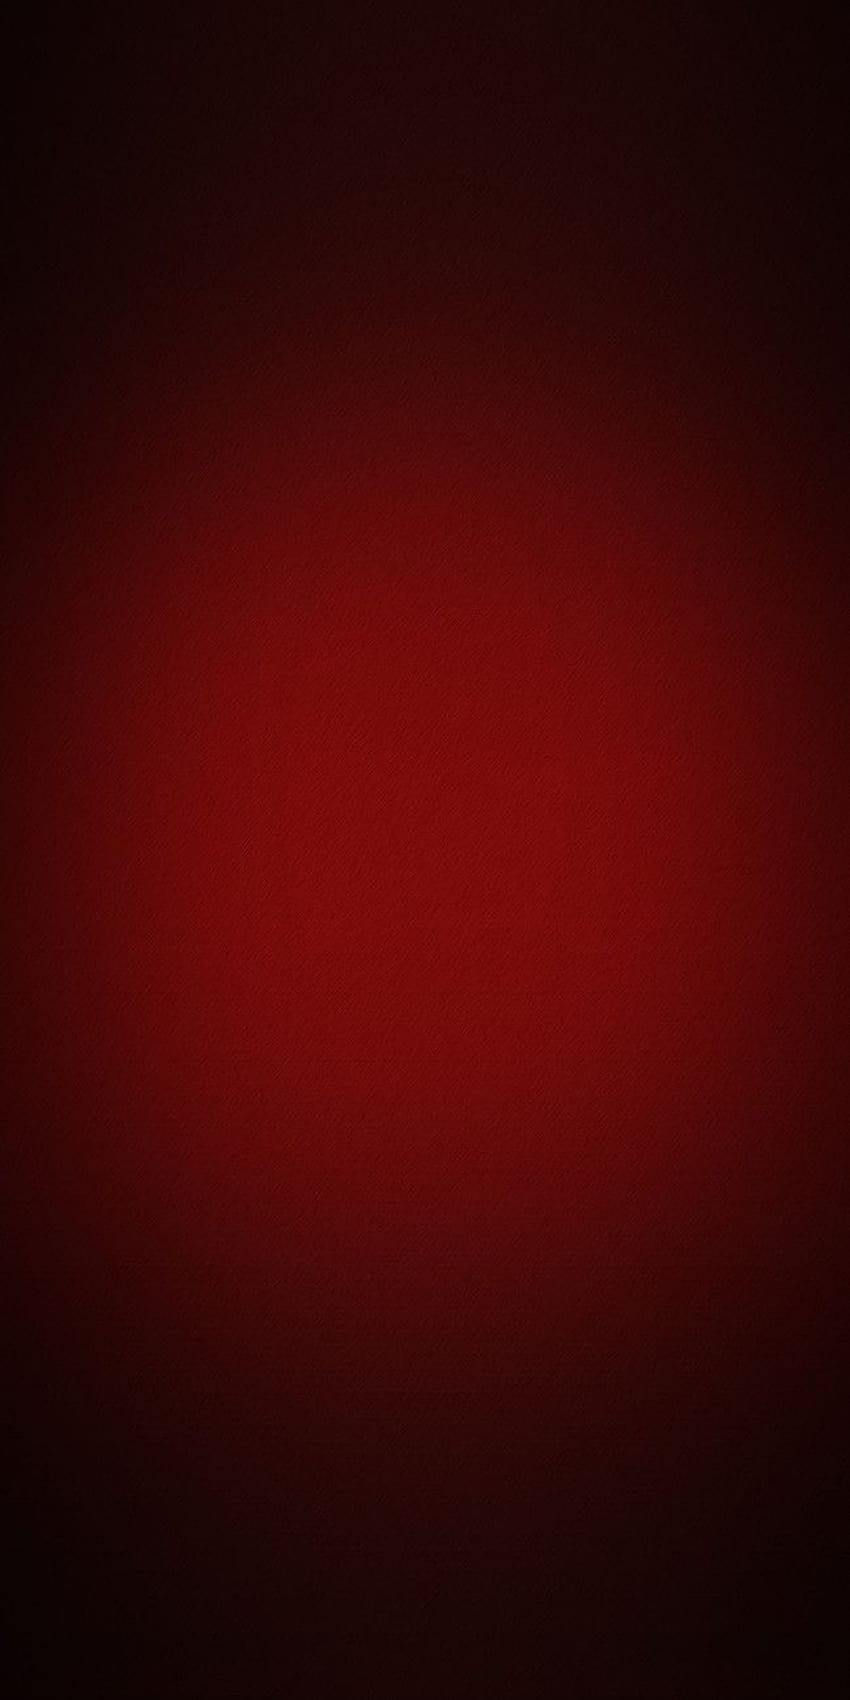 Dark Red Gradient Backgrounds, orange dark red and black gradient android HD phone wallpaper